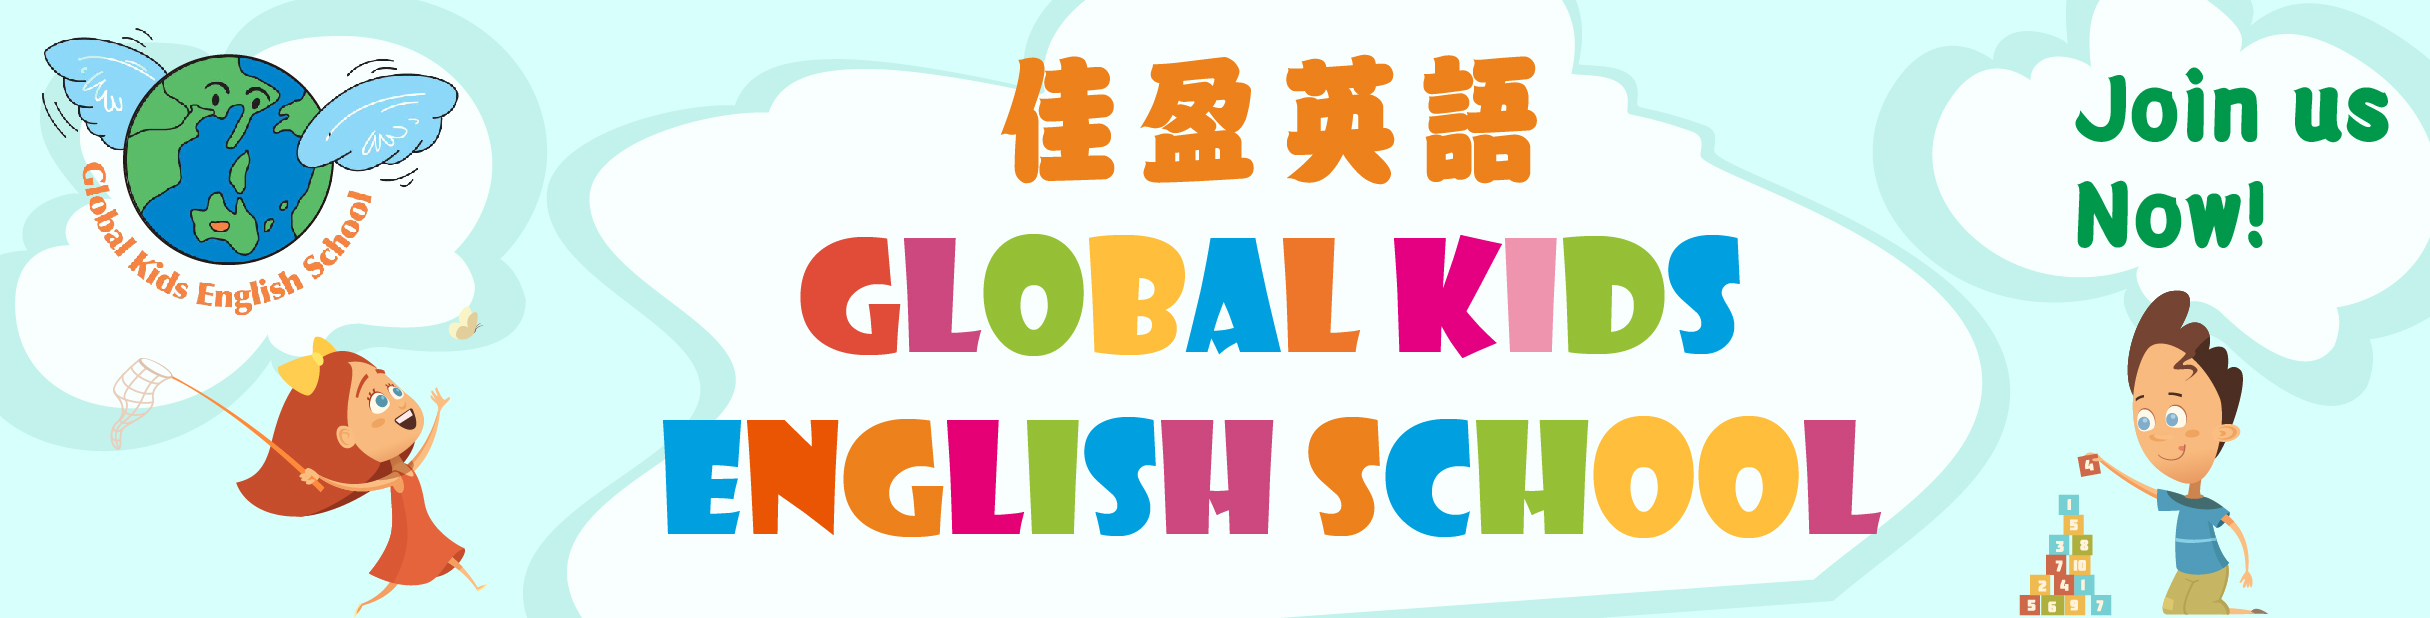 taiwan teaching english job Global Kids English School